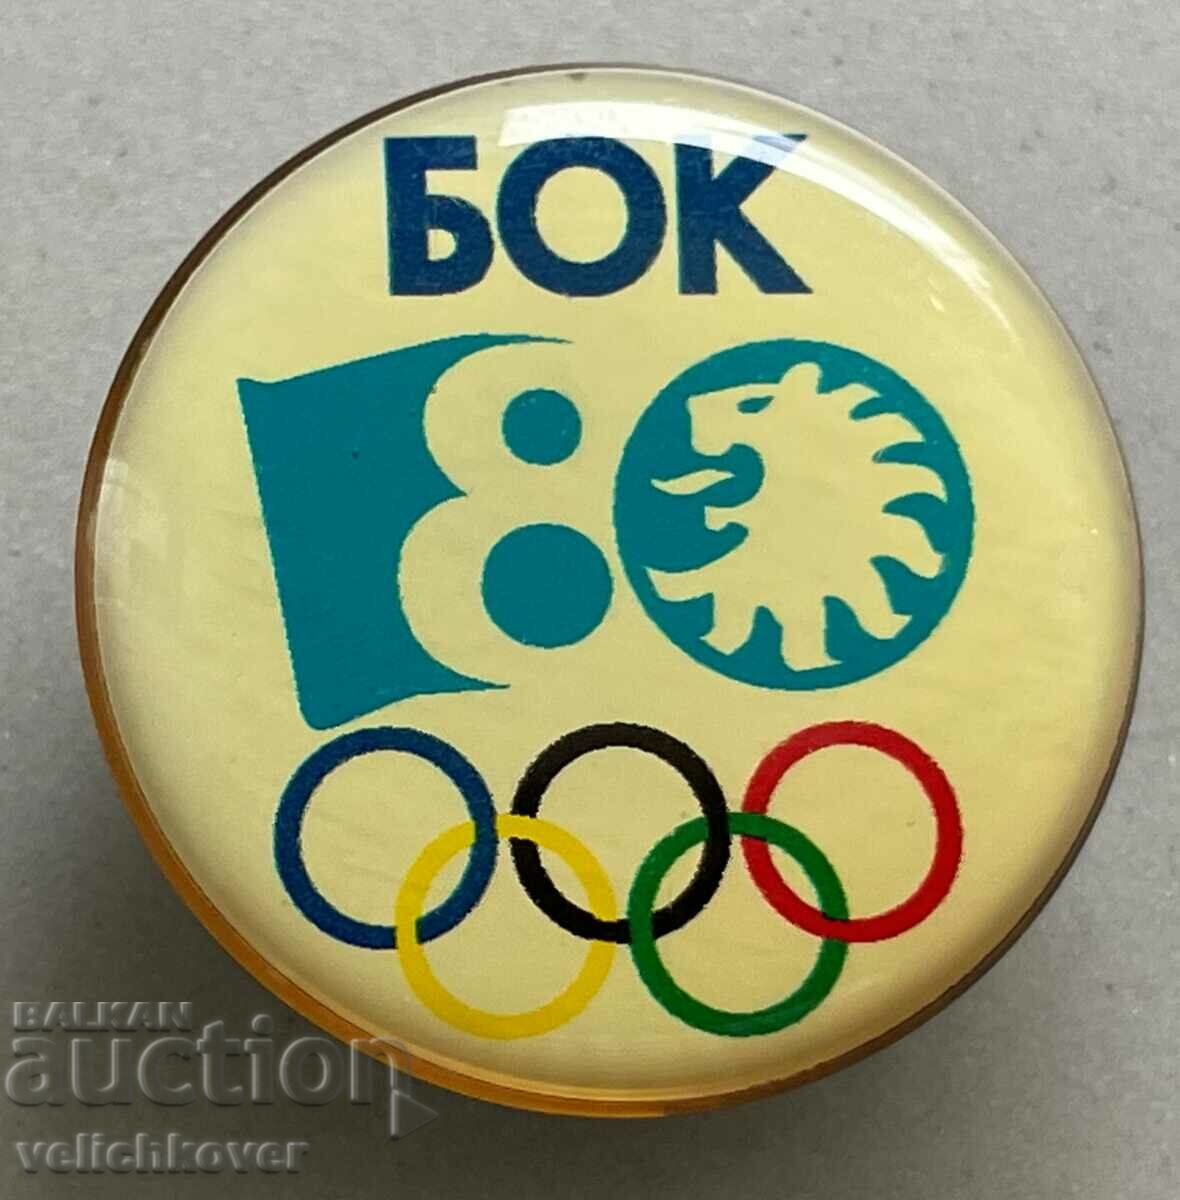 33312 Bulgaria sign 80 BOK Bulgarian Olympic Committee